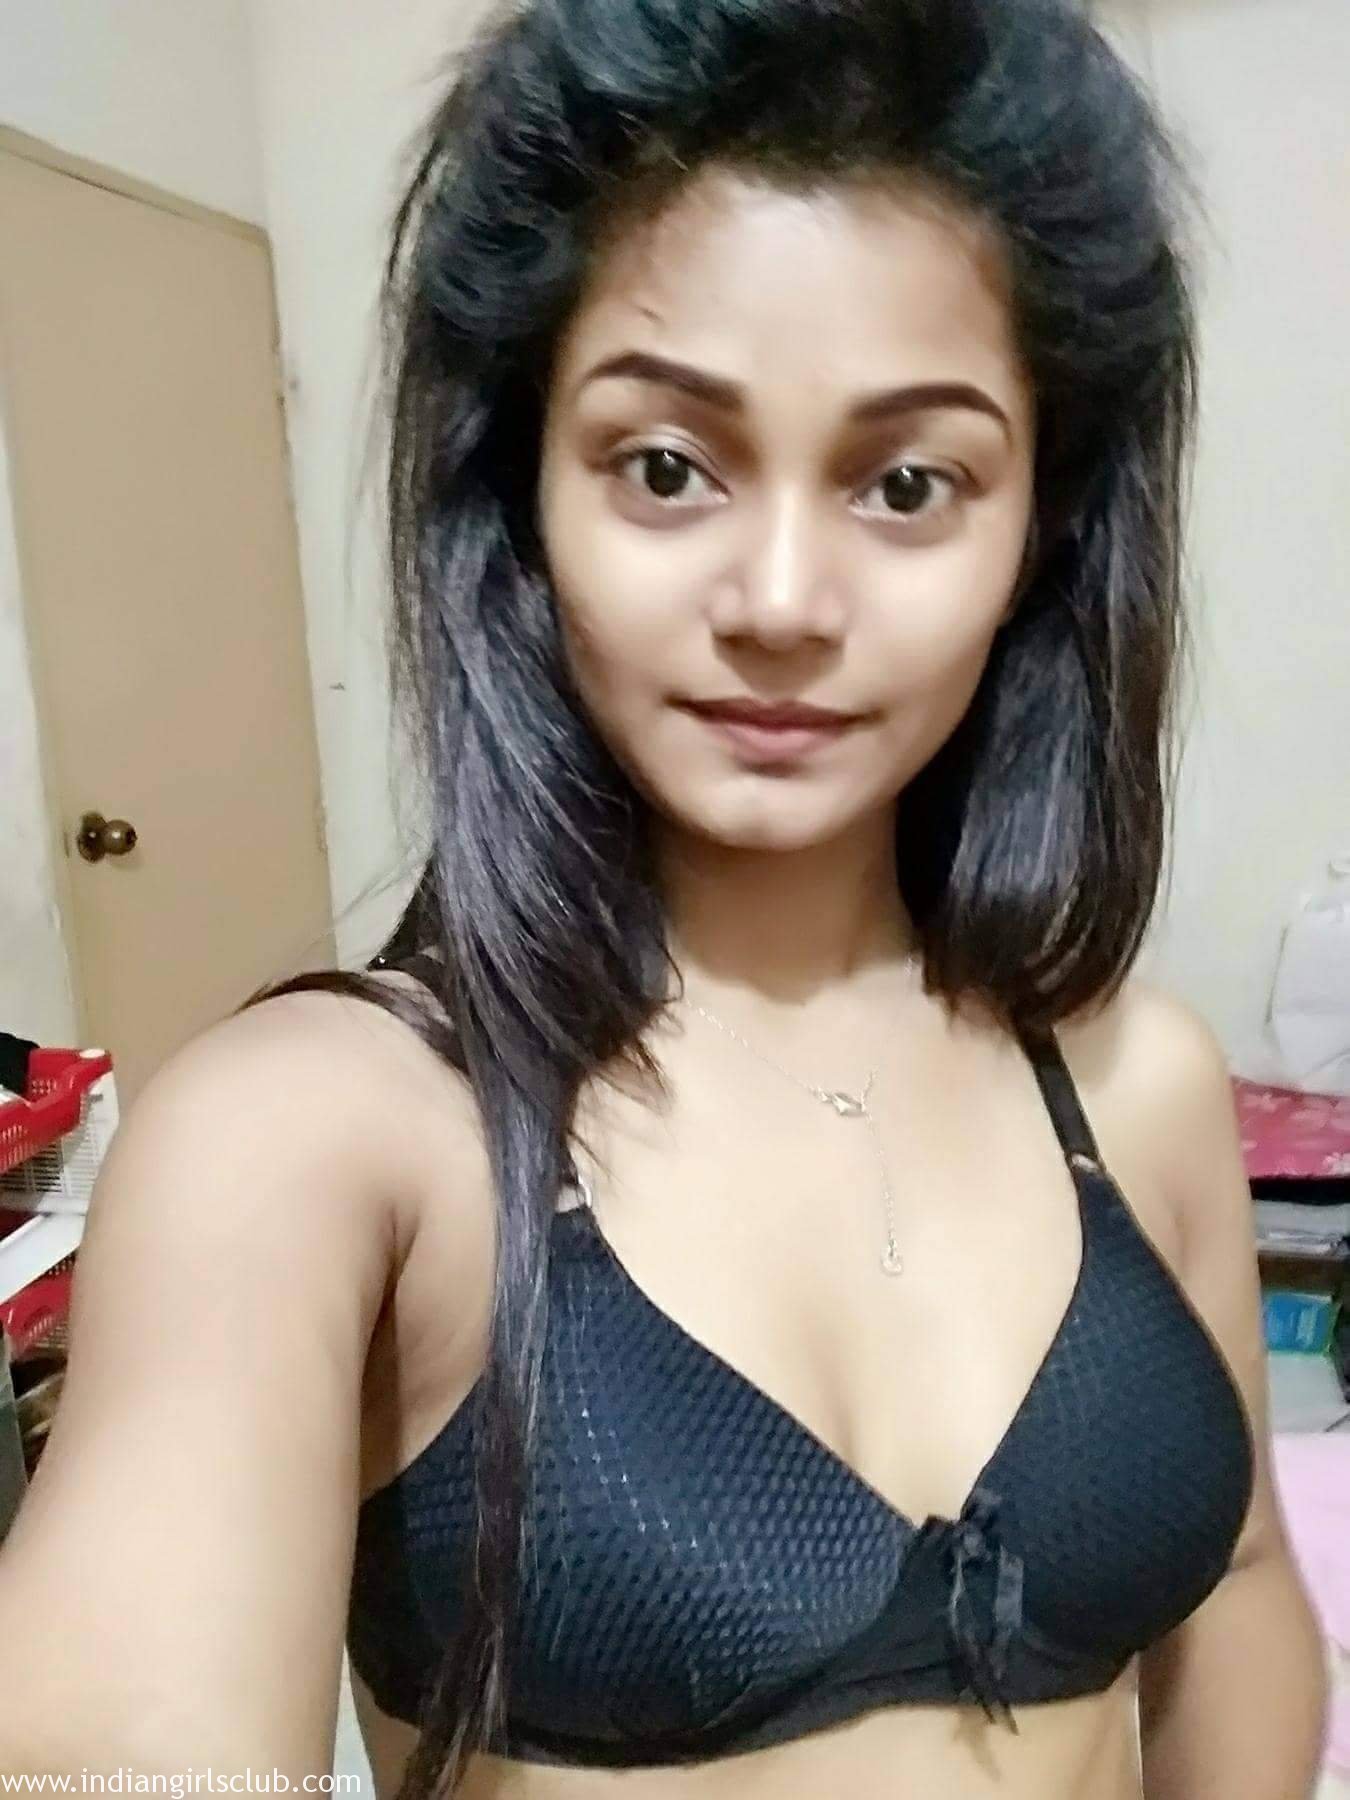 juicy_indian_teen_homemade_porn_5 - Indian Girls Club - Nude Indian Girls &  Hot Sexy Indian Babes